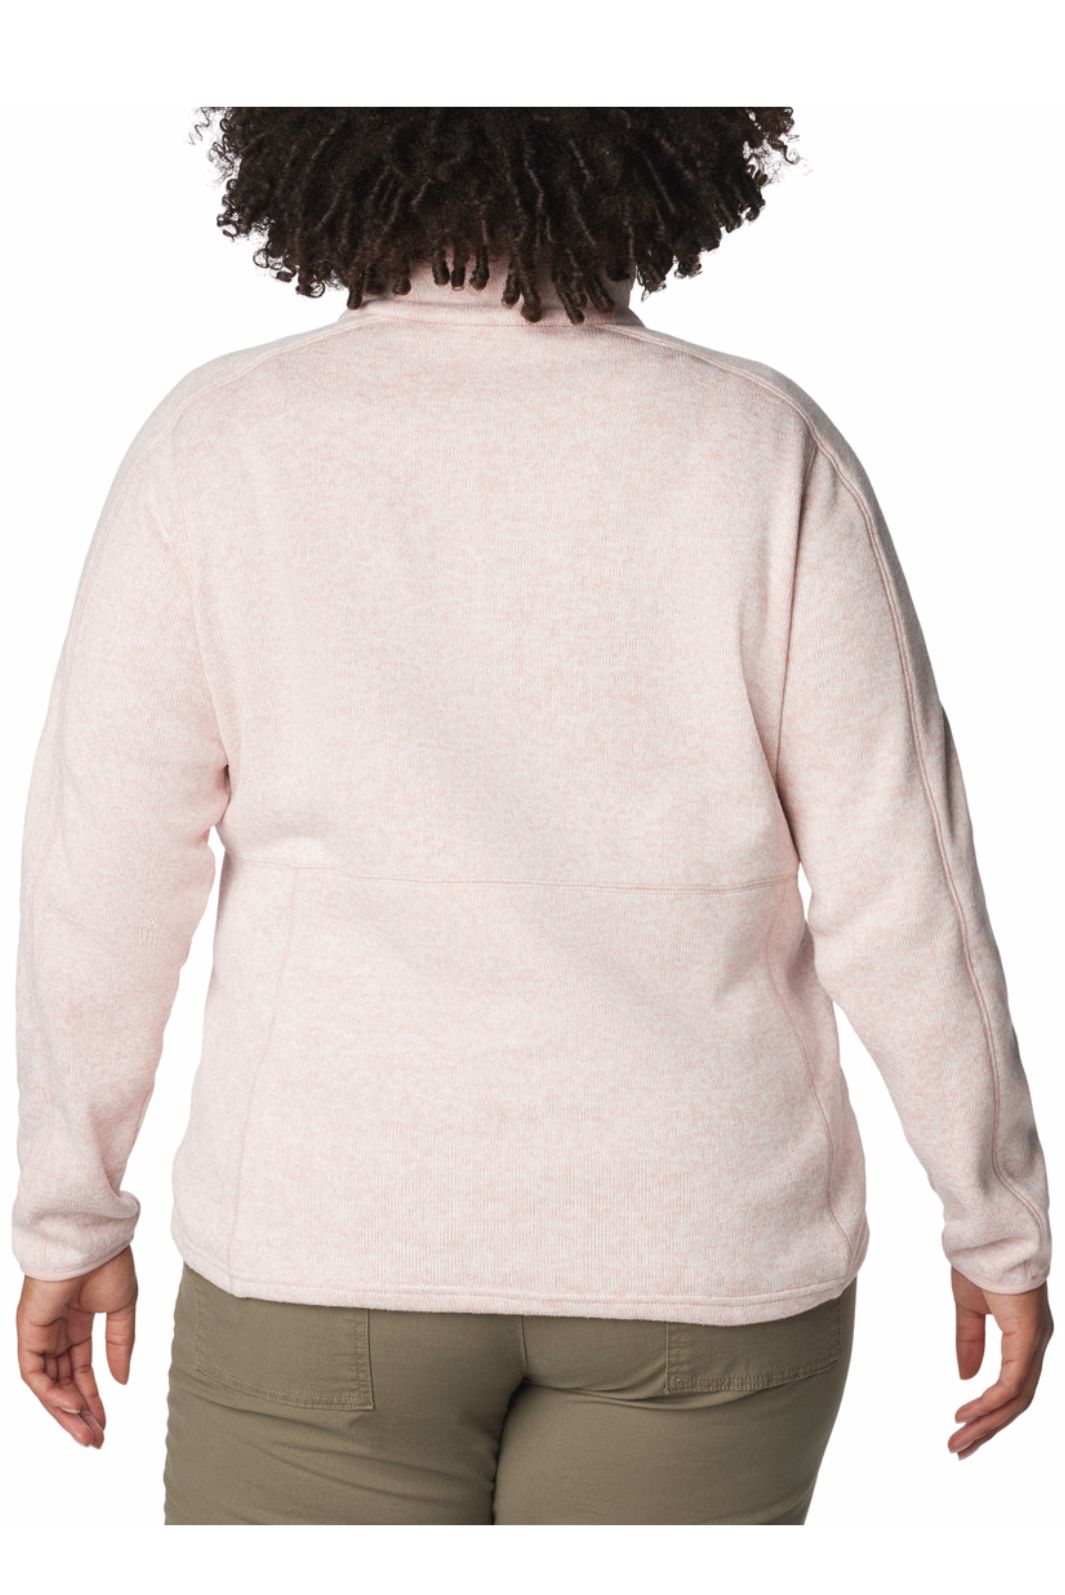 Veste Polar Sweater Weather  Full Zip Taille Plus de Columbia